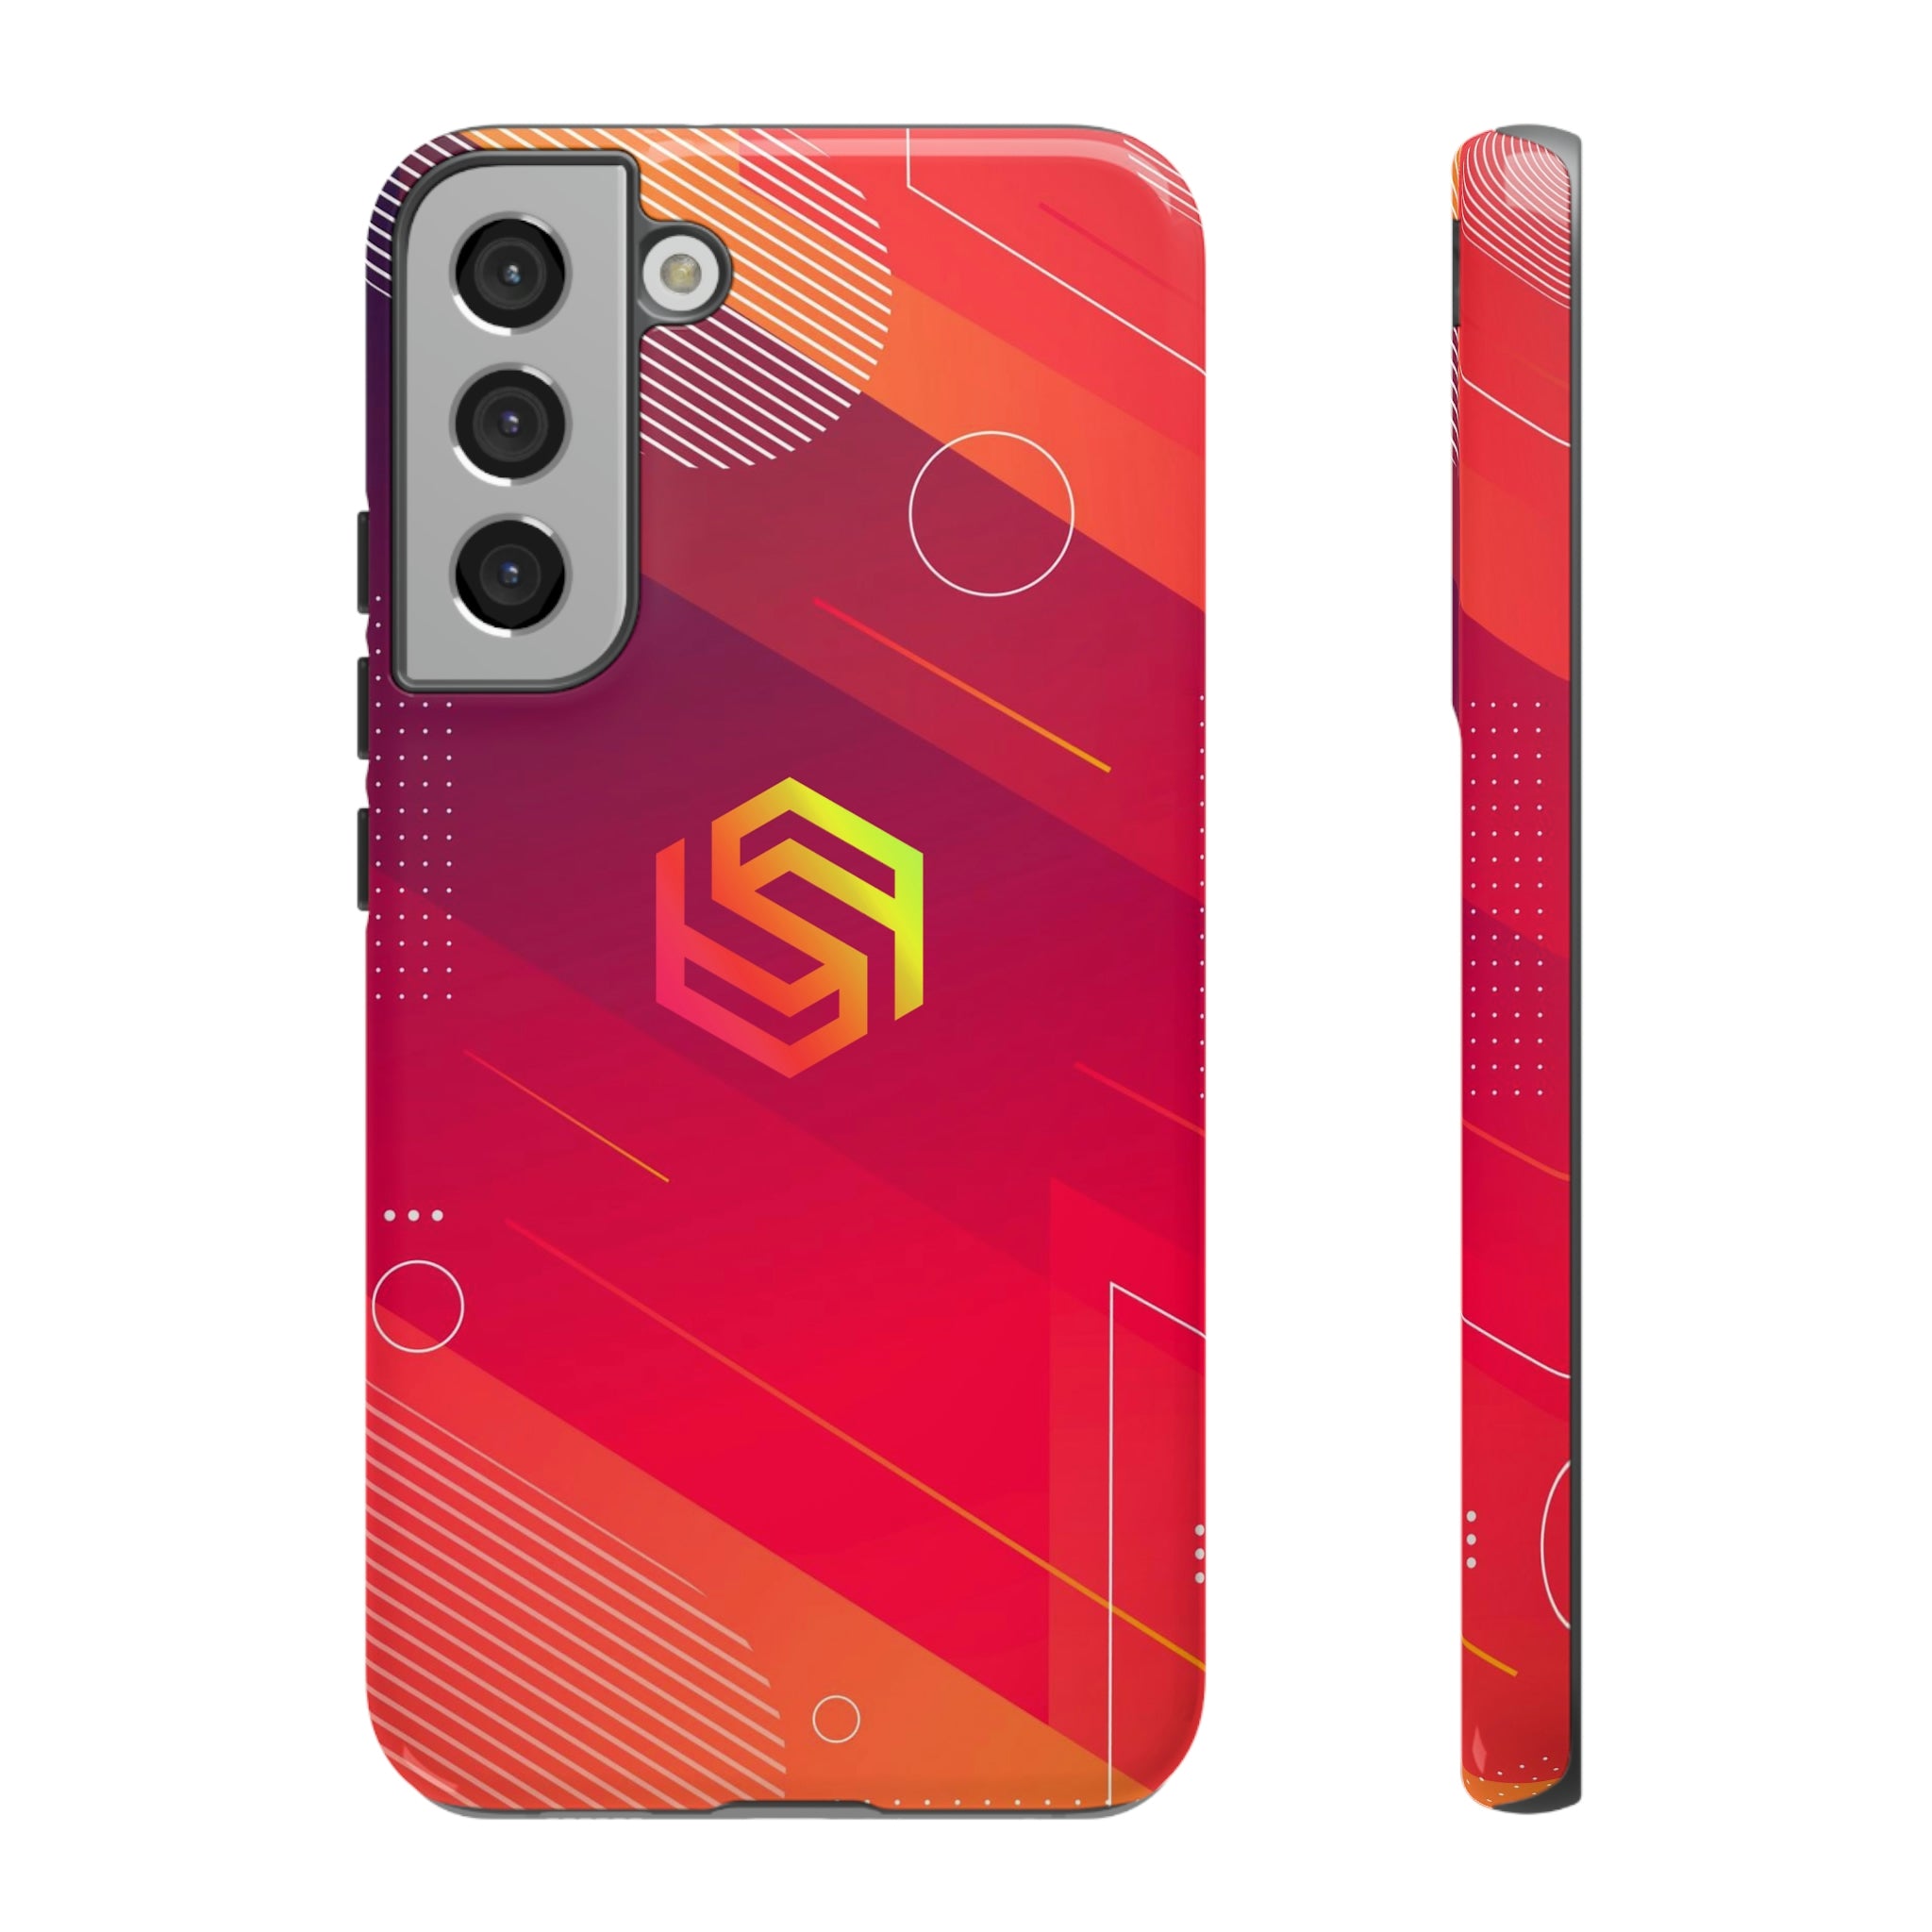 Heatwave - Dual Layered, Full Body, Armored Phone Case for iPhone 13/Samsung Galaxy S22/Google Pixel 6Smartphone CasesStreamLiteStreamLite